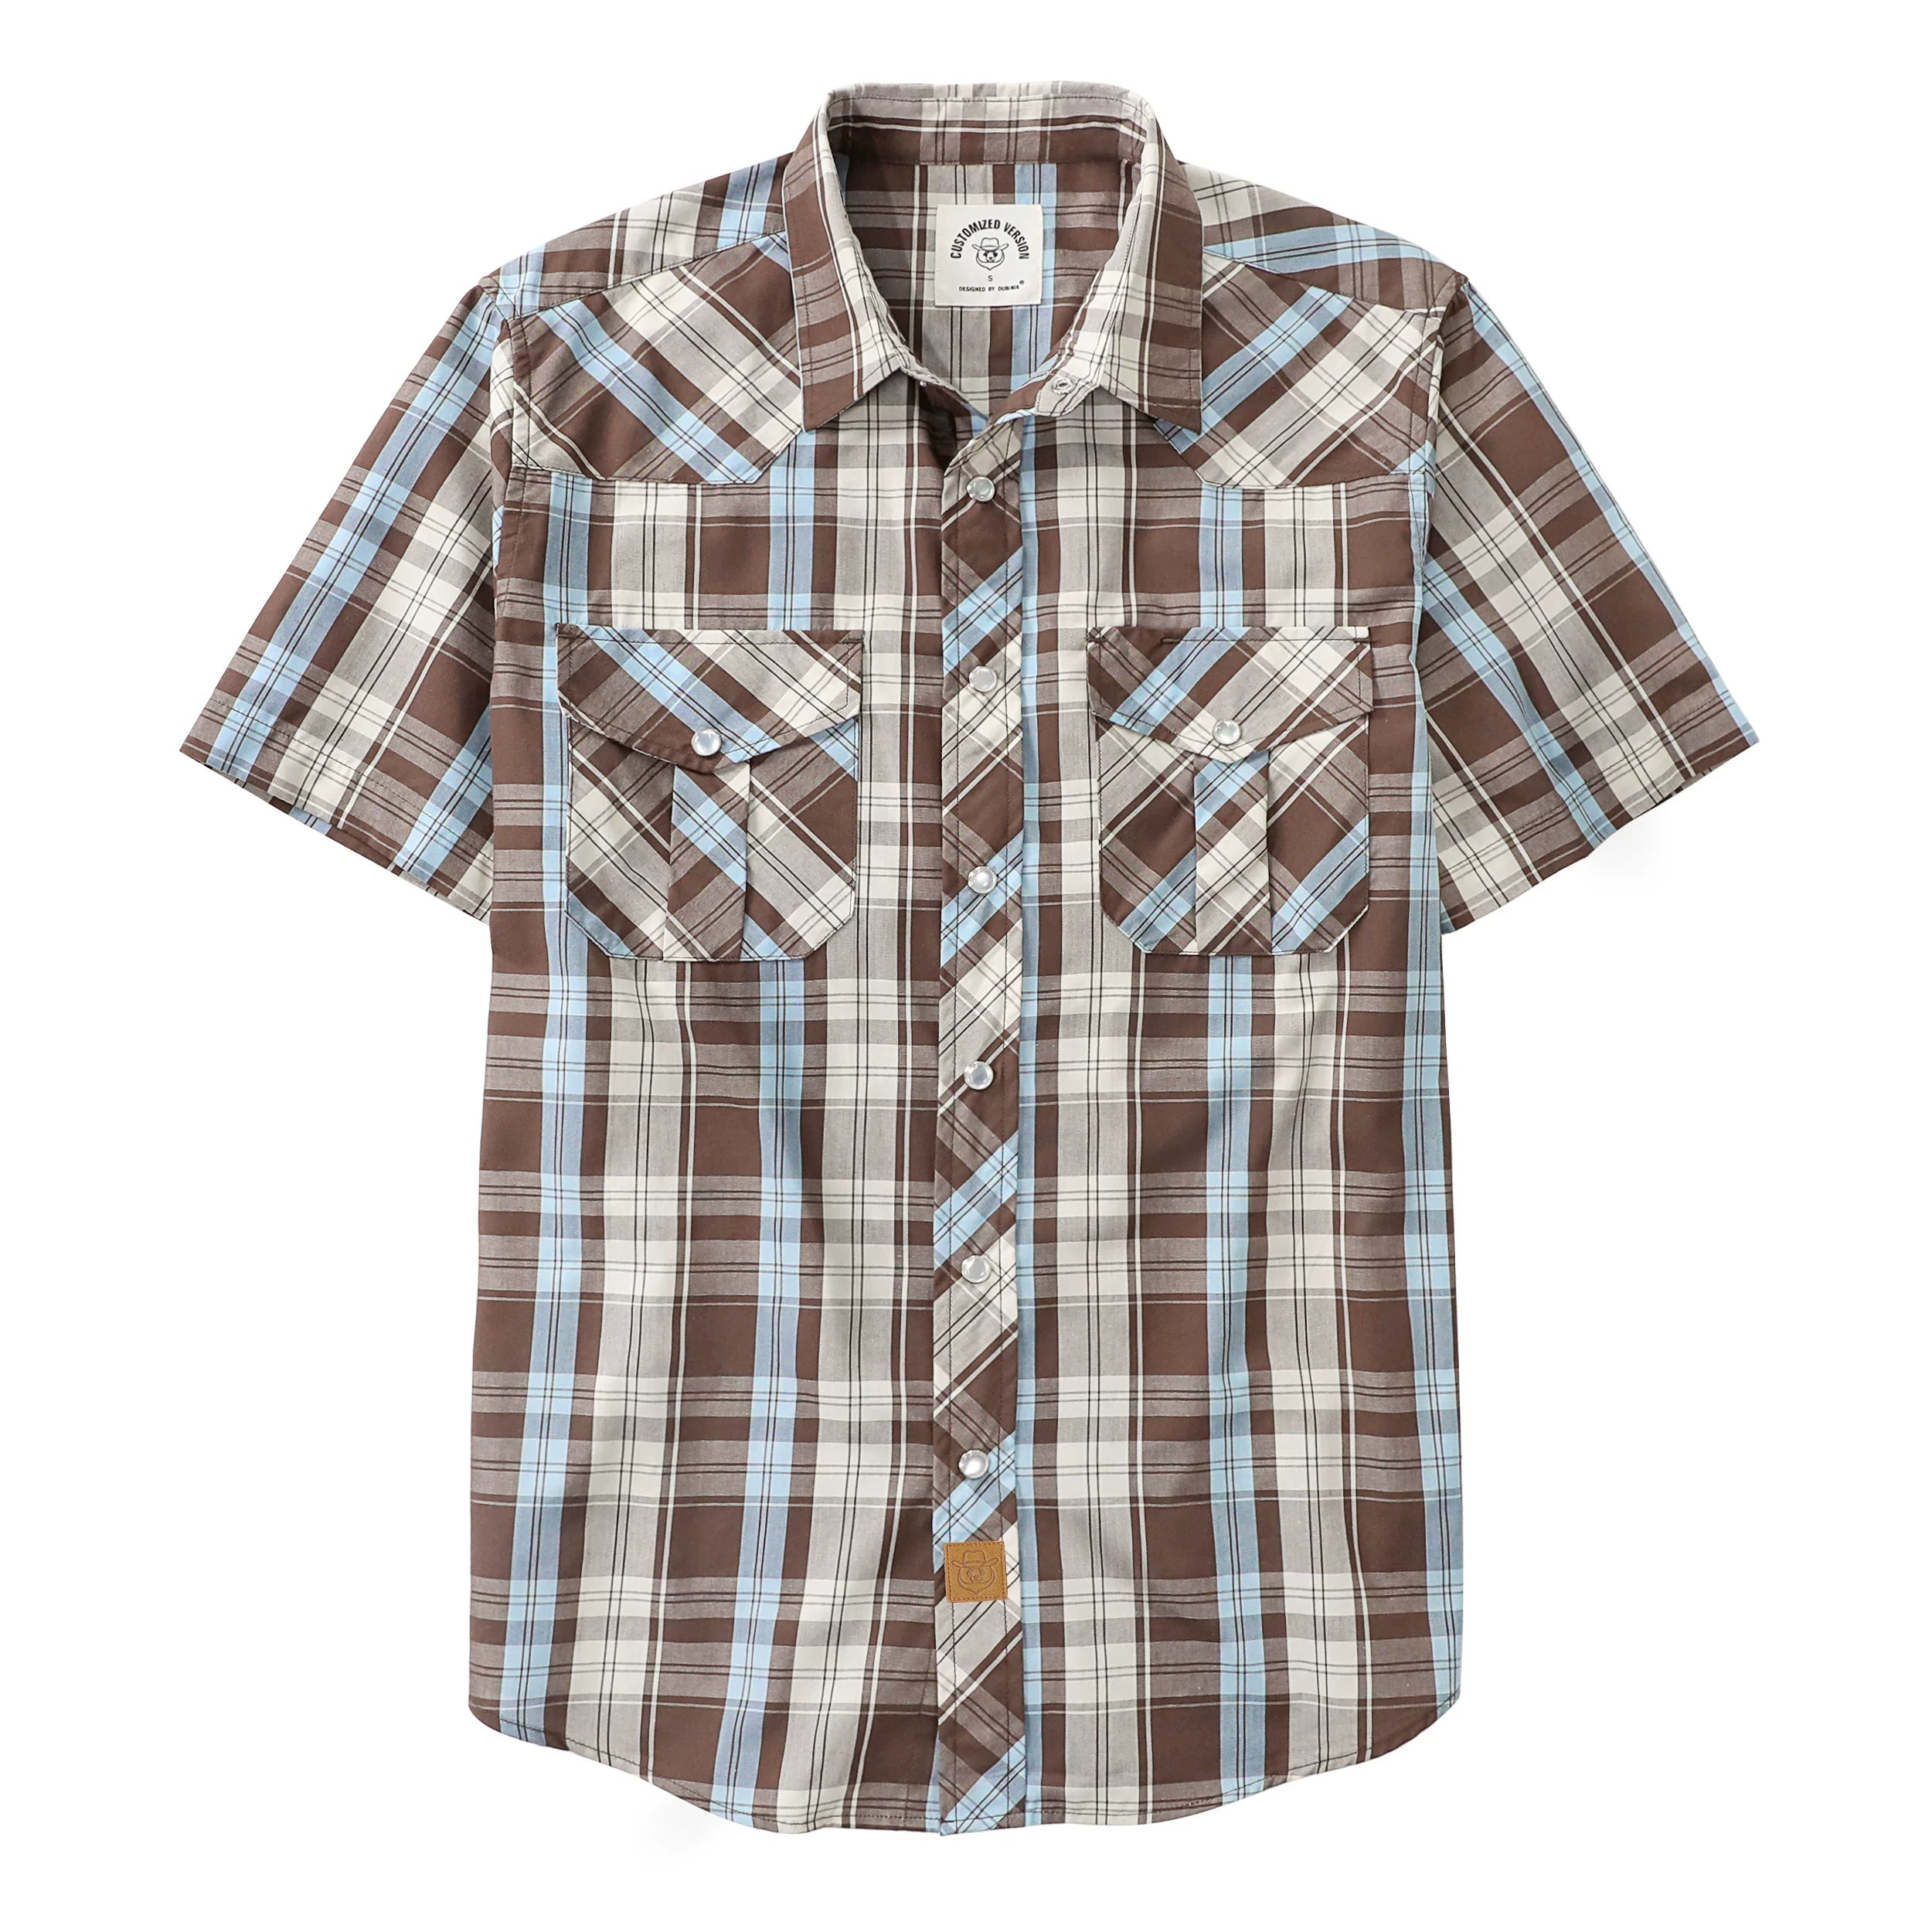 Dubinik® Western Shirts for Men Short Sleeve Plaid Pearl Snap Shirts for Men Button Up Shirt Cowboy Casual Work Shirt#41001